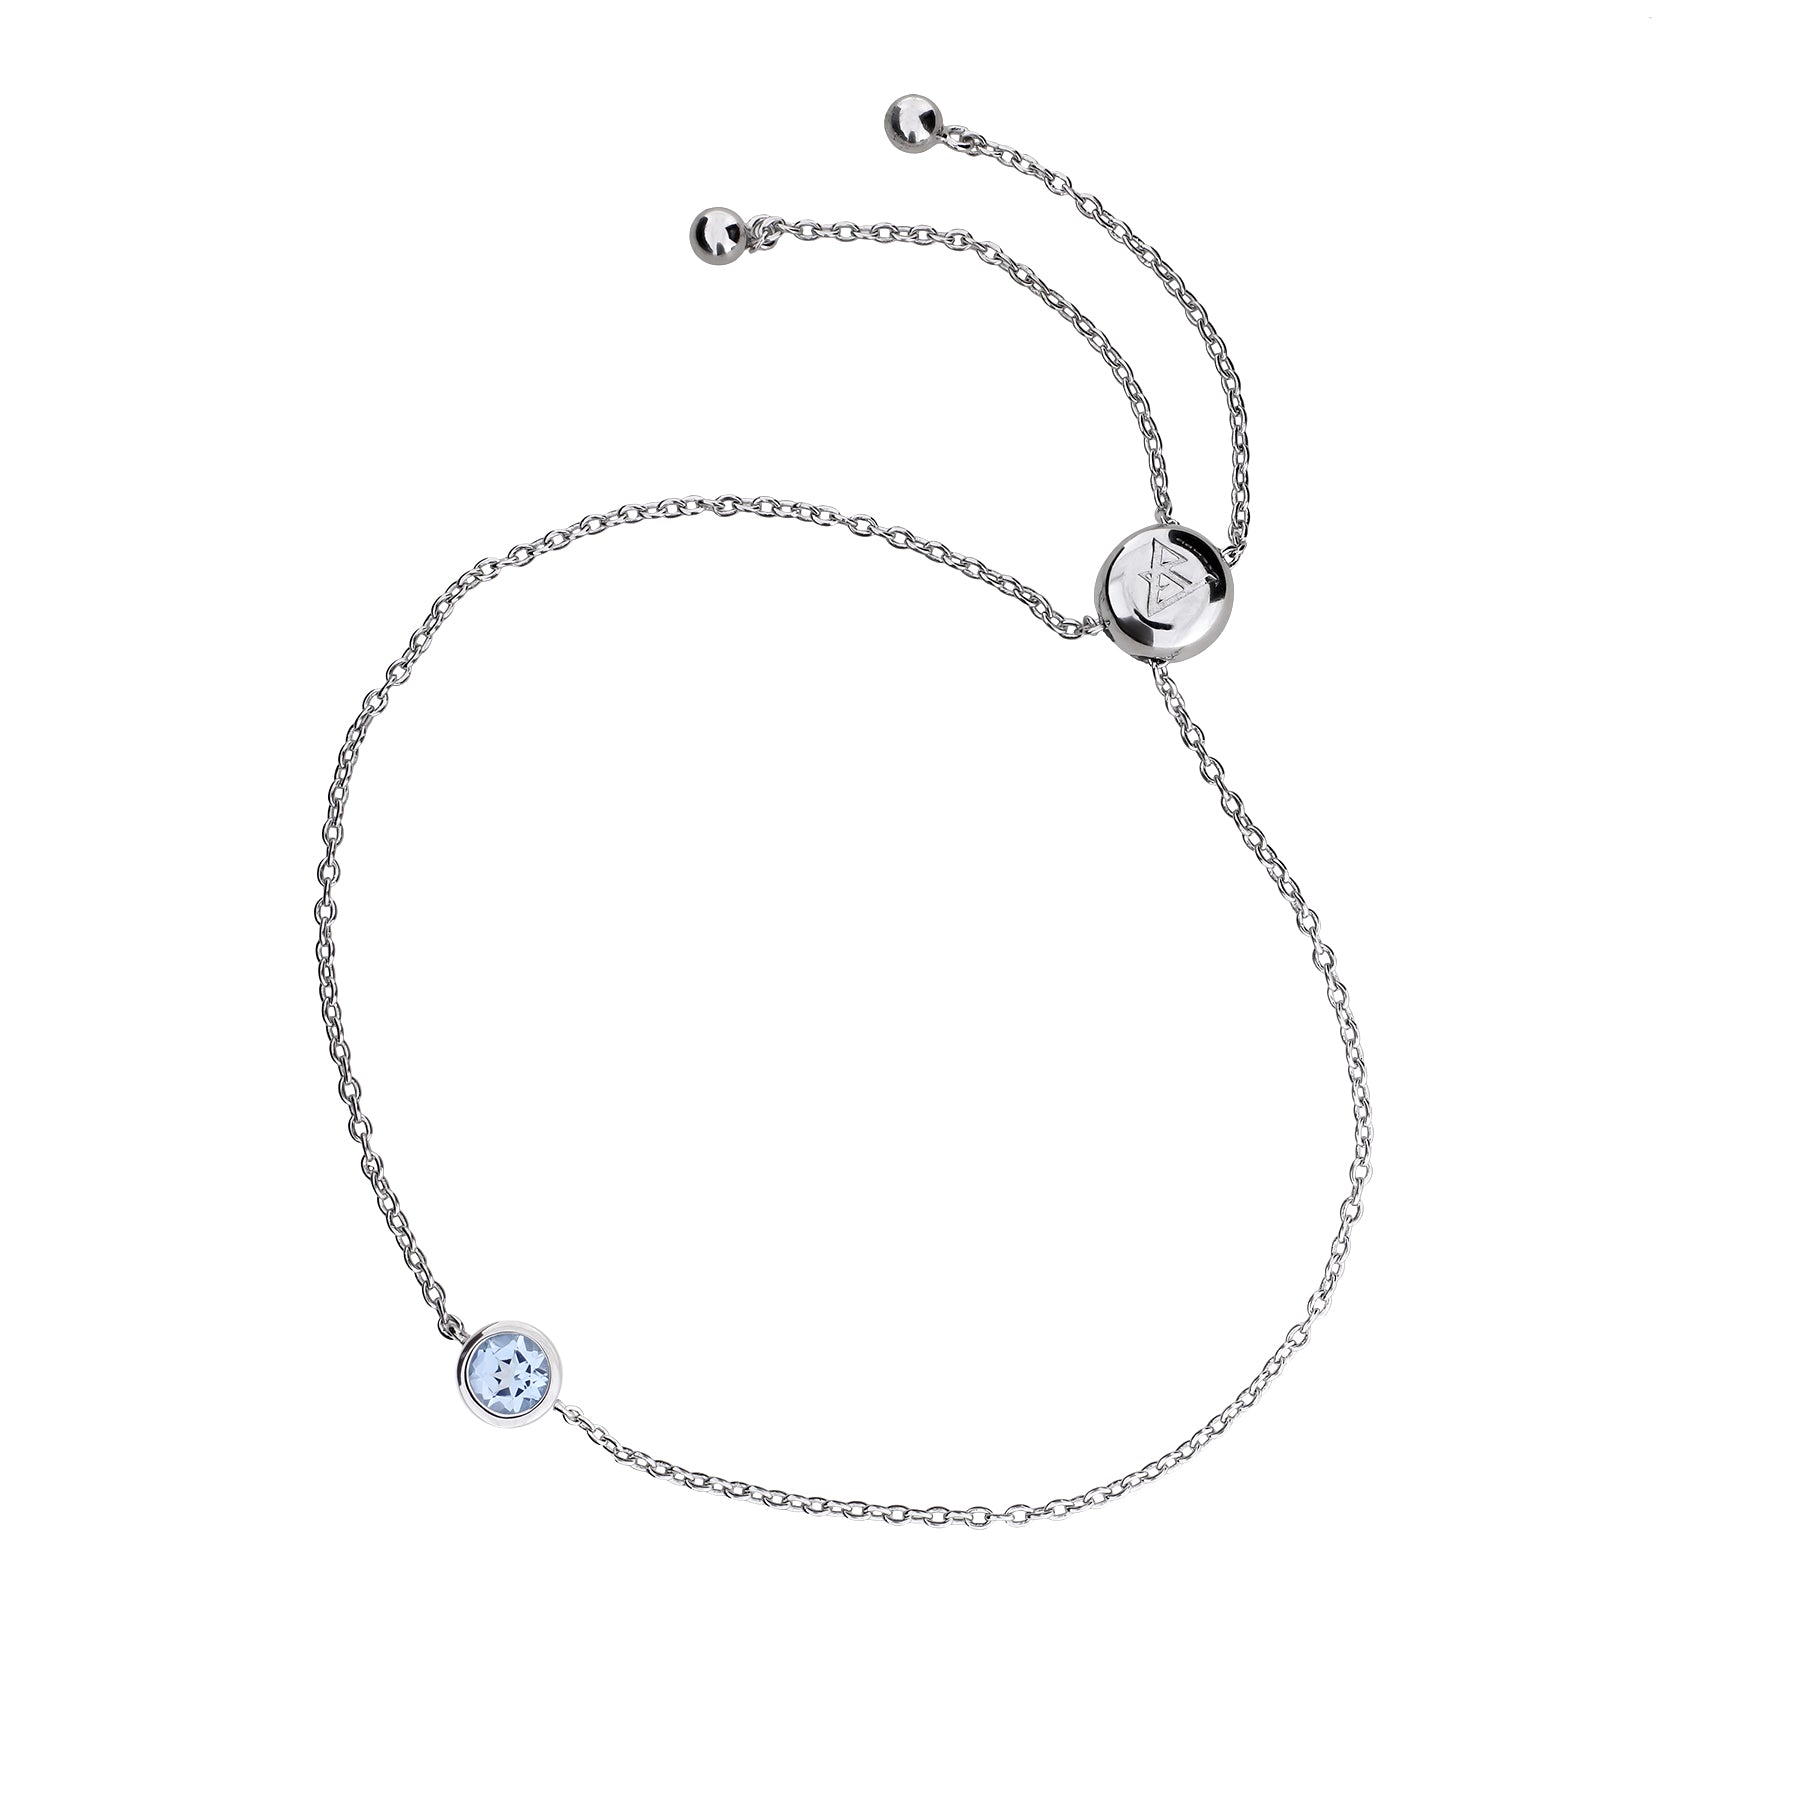 November Birthstone Bracelet - Blue Topaz